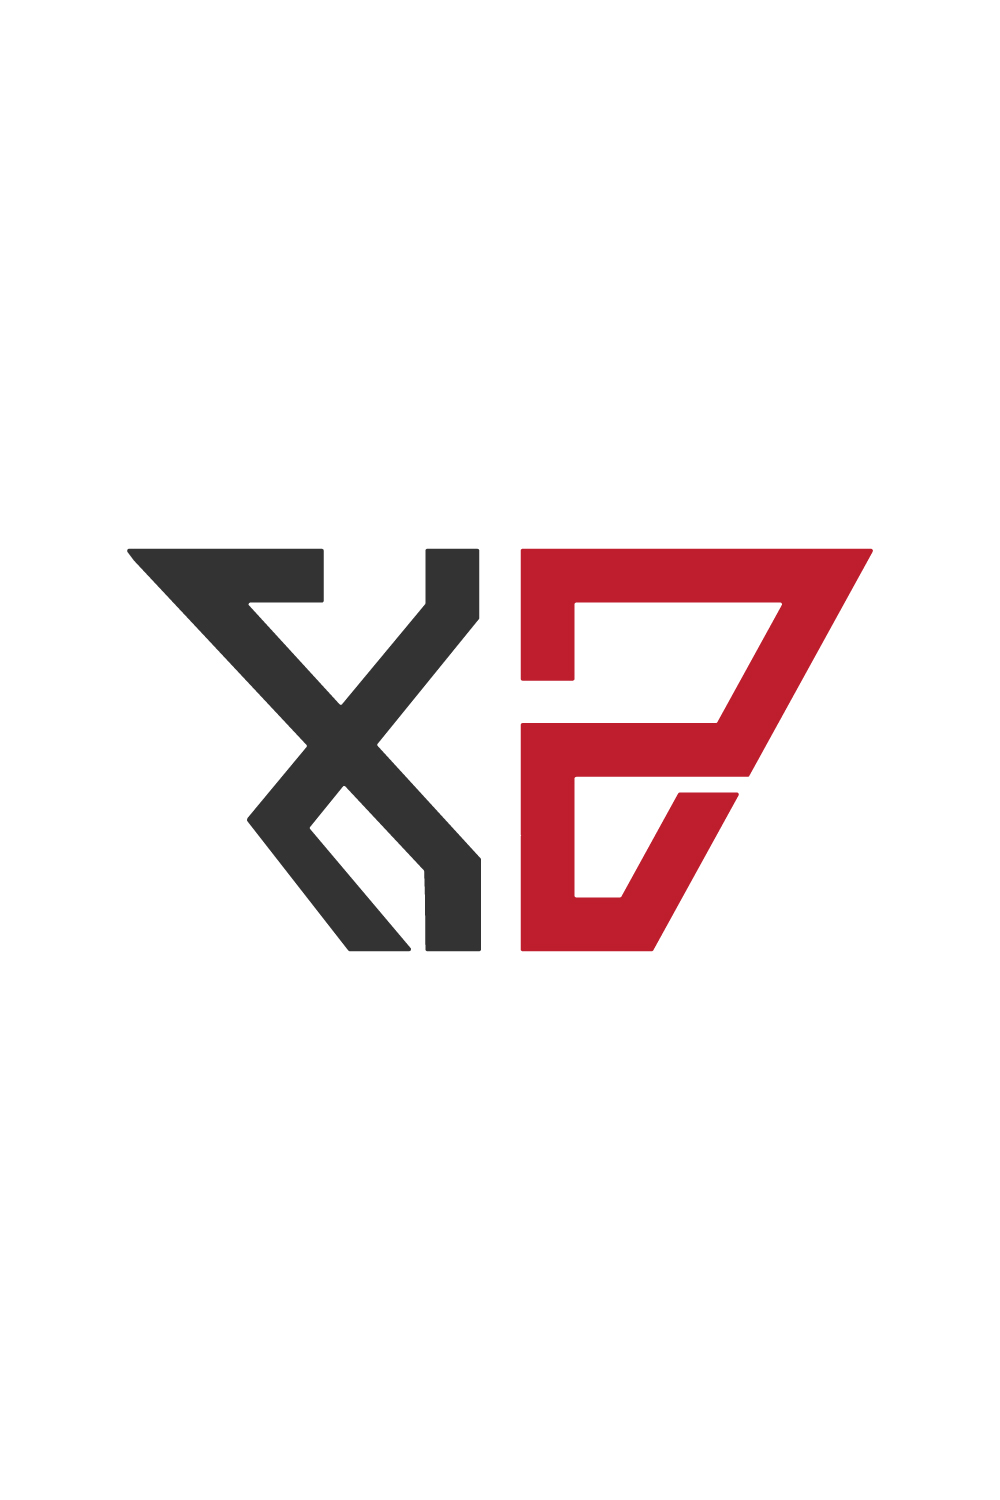 Initials XZ letters logo design vector icon. ZX logo design red and black  color company identity.